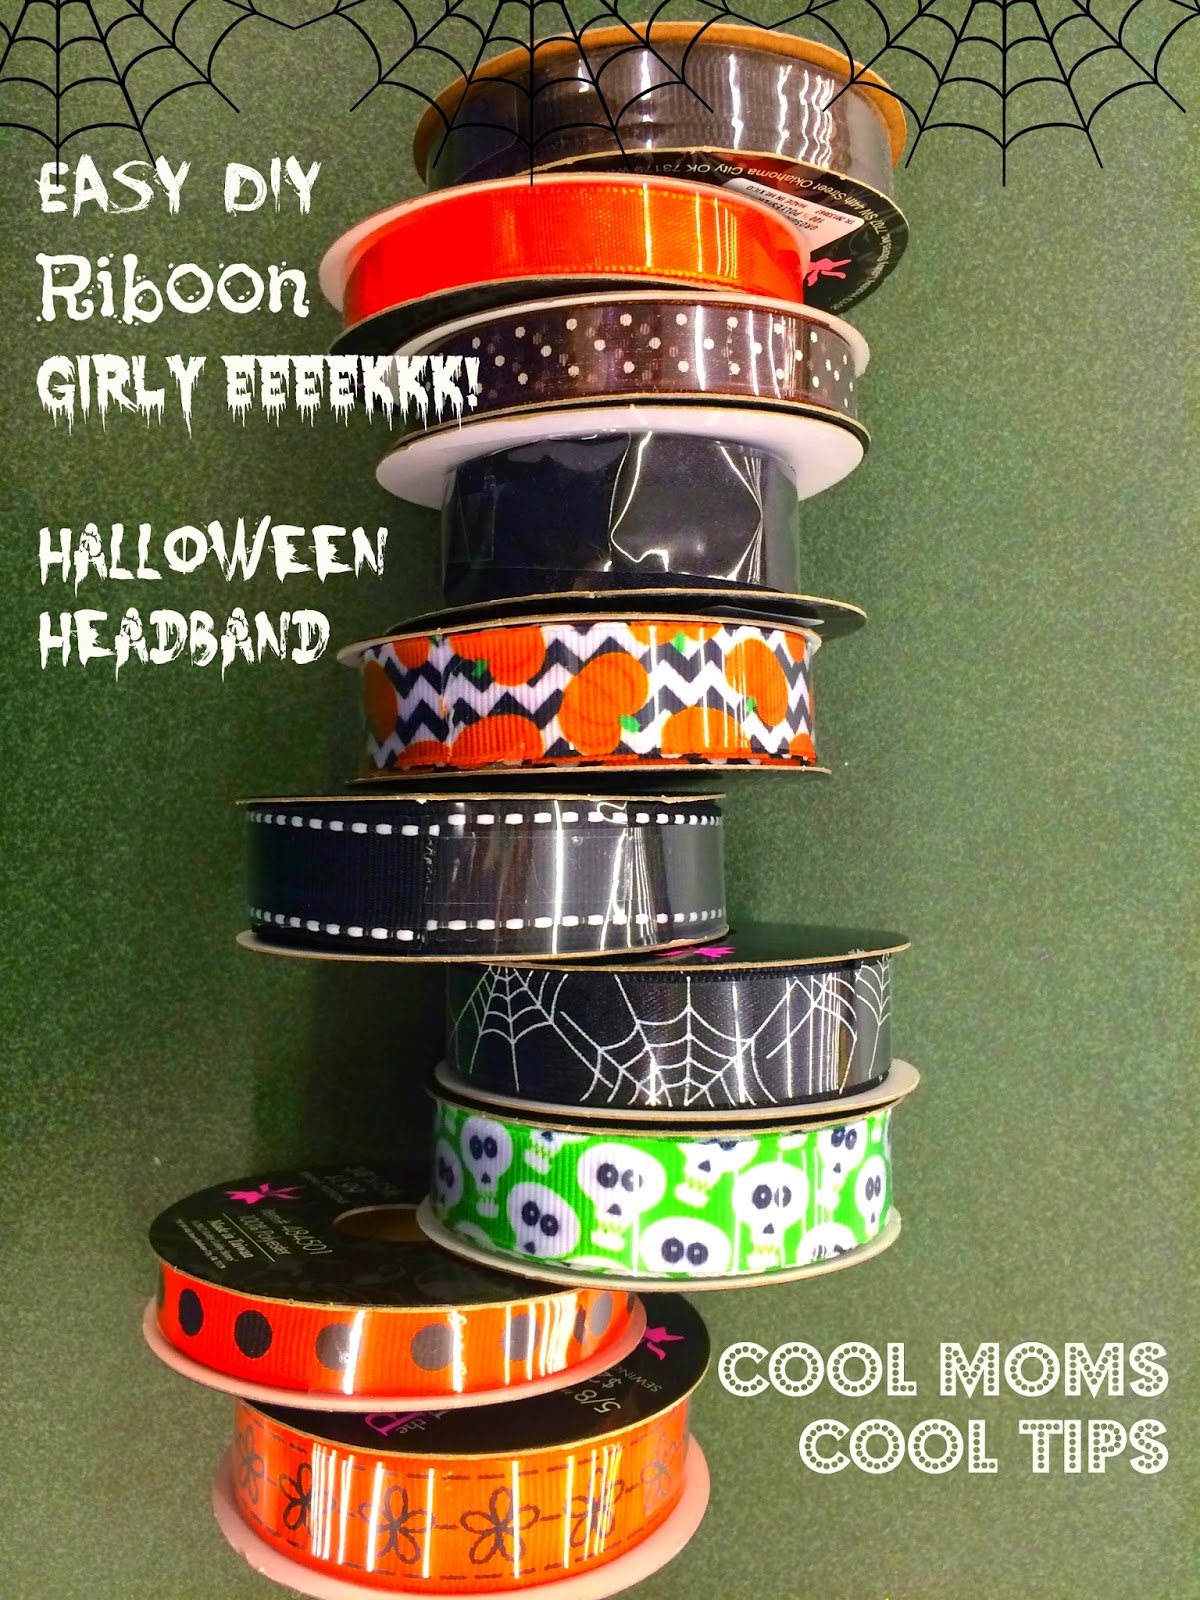 cool moms cool tips halloween headband for girls ribbon DIY